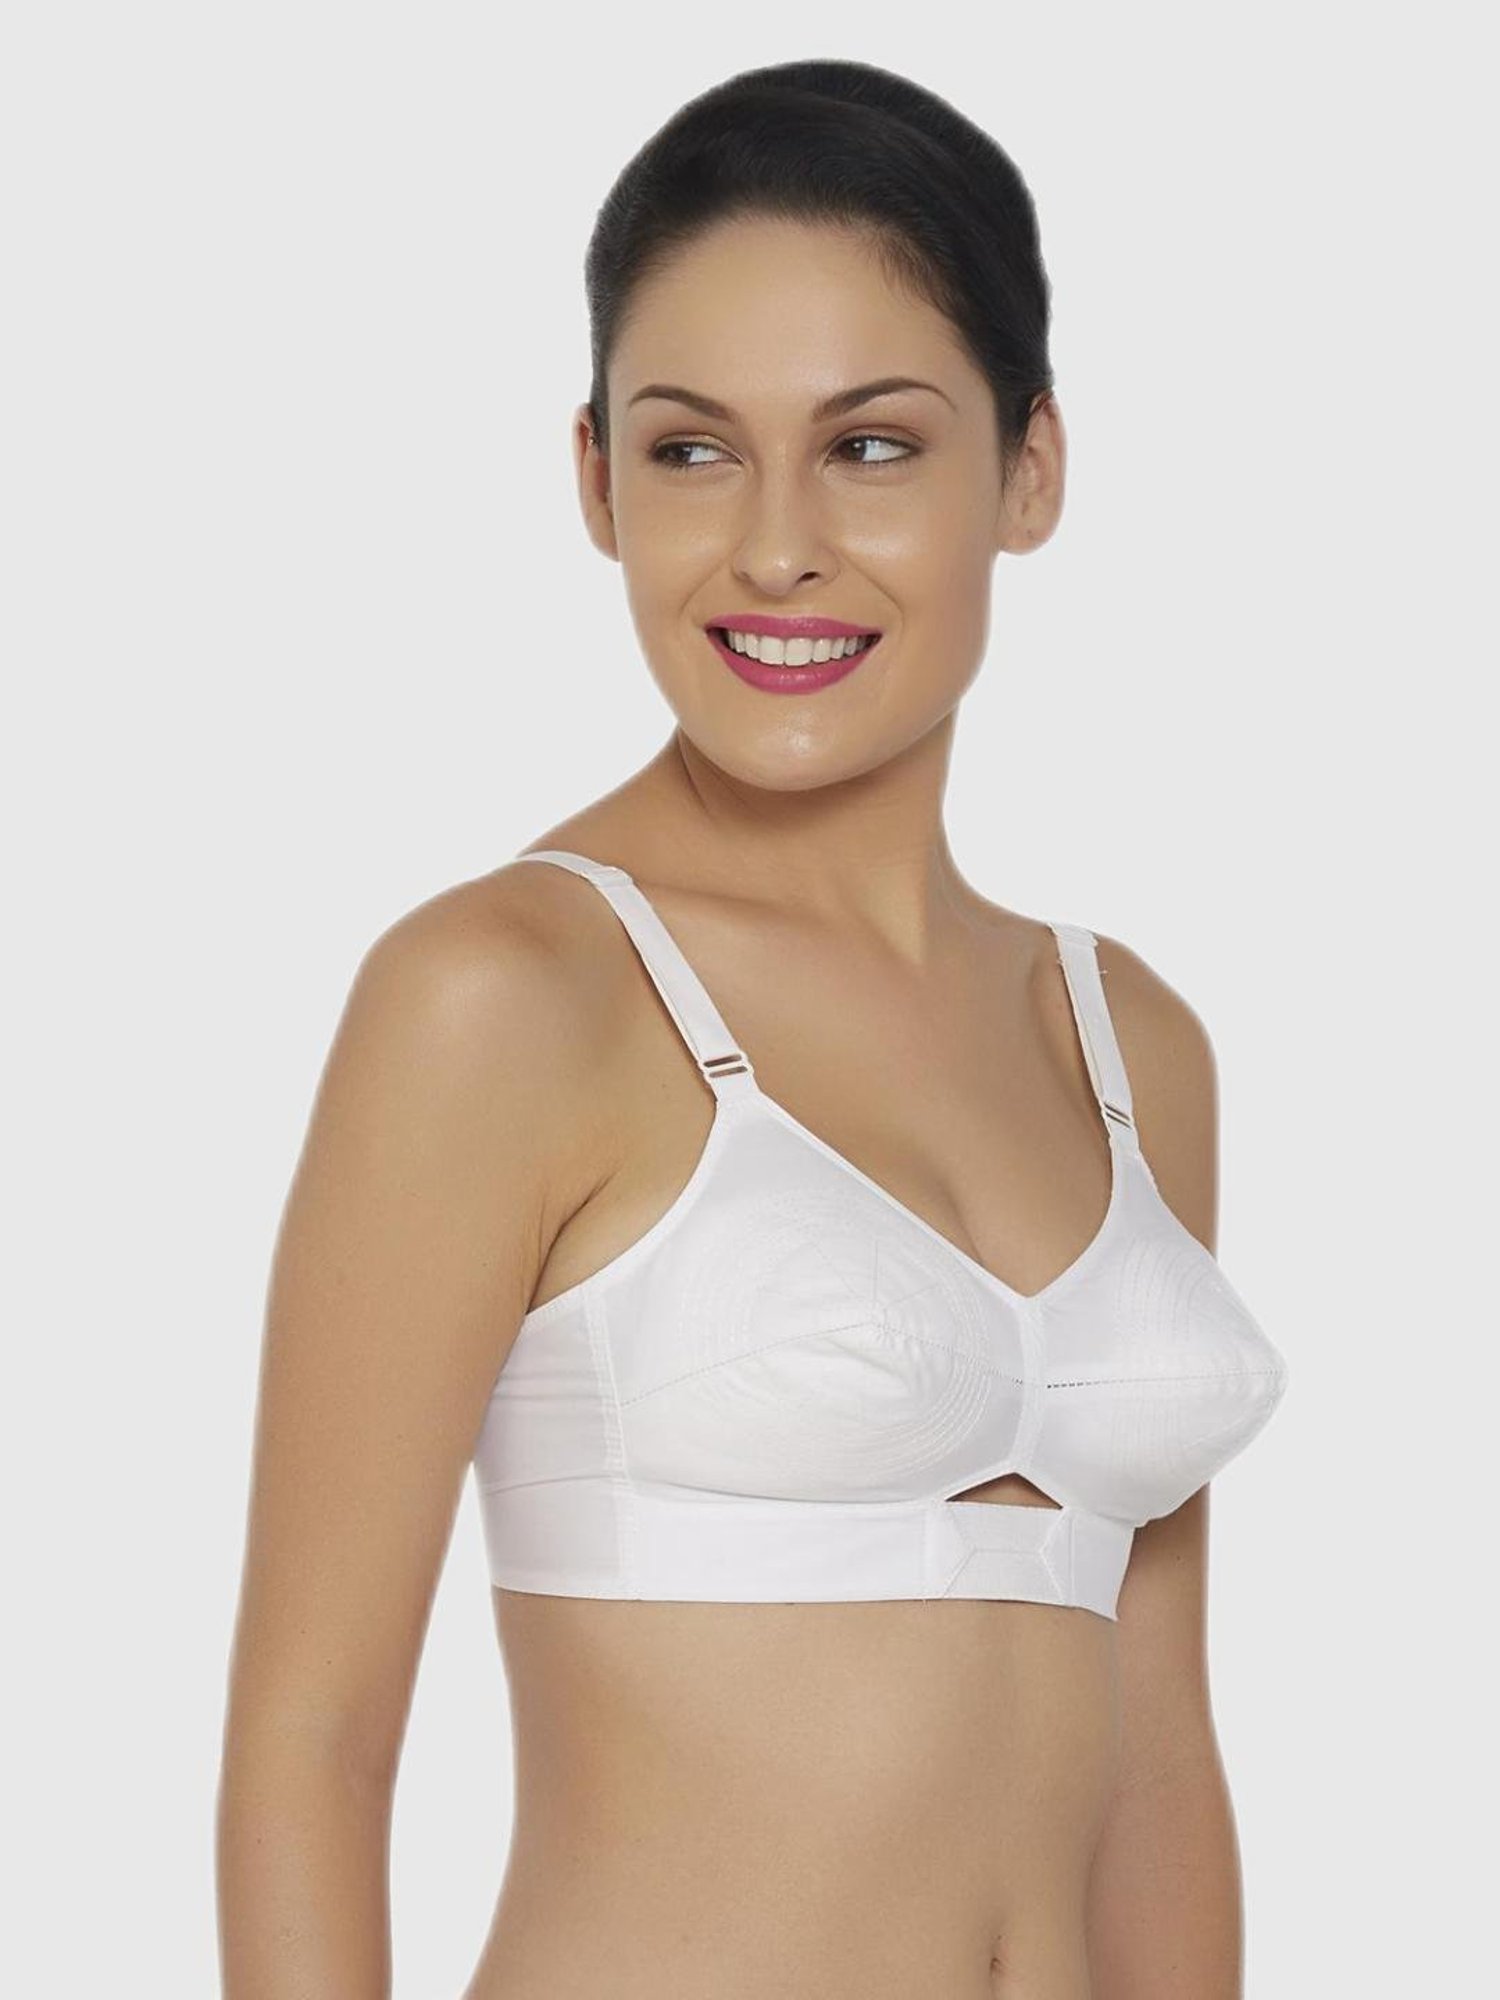 Buy online White Cotton Regular Bra from lingerie for Women by Libertina  for ₹185 at 5% off